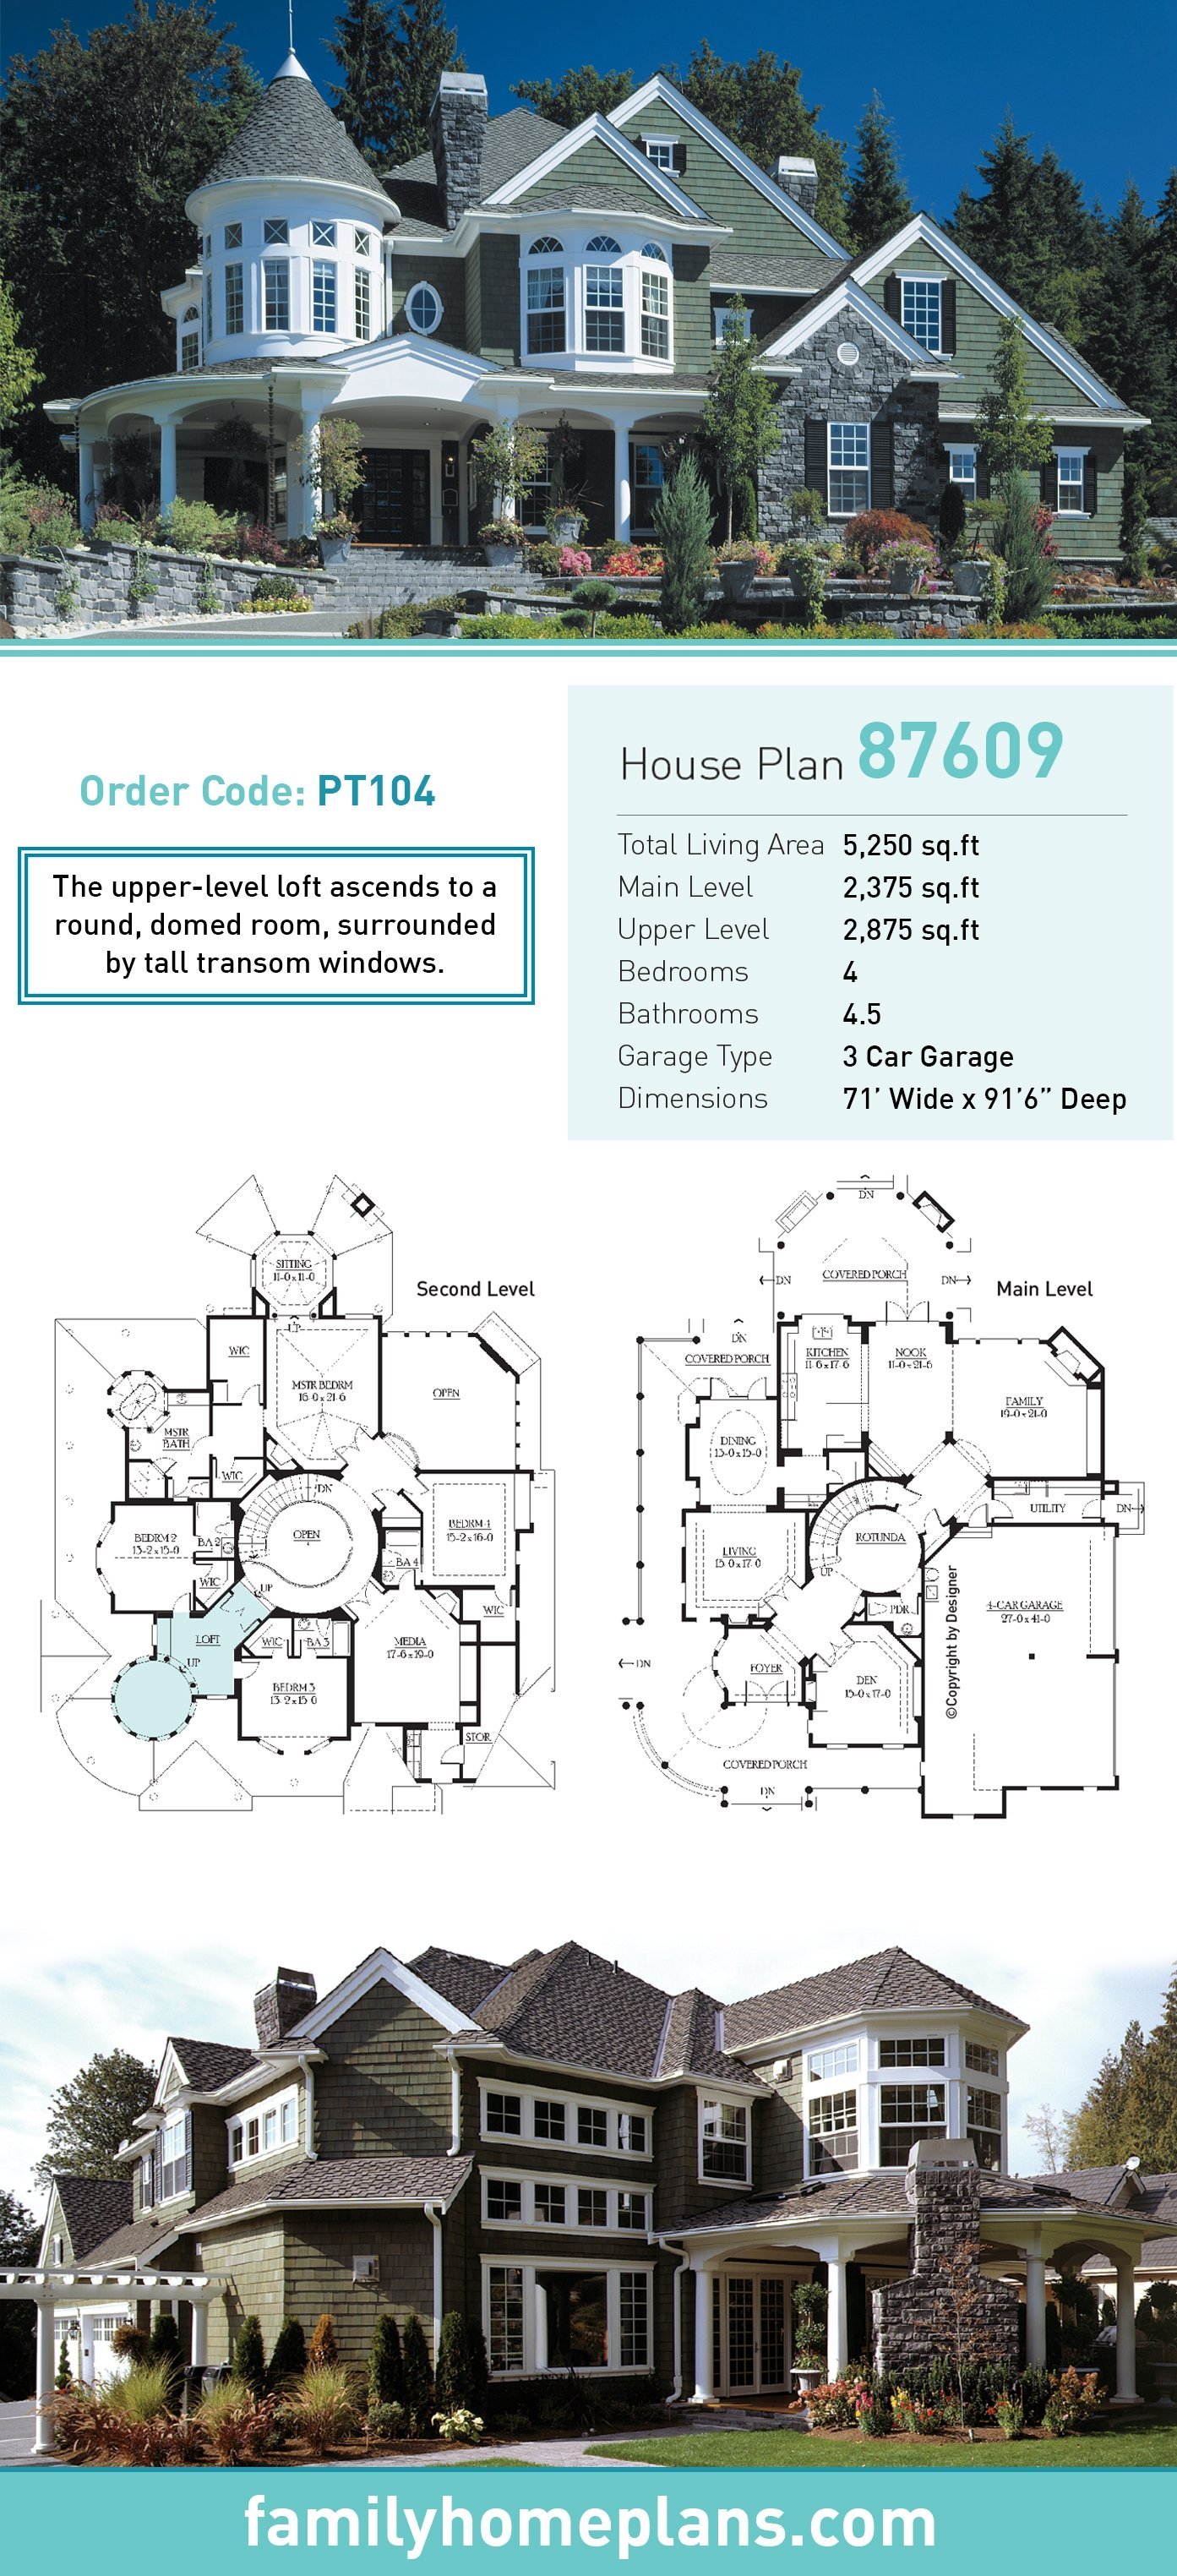 House Plan 87609